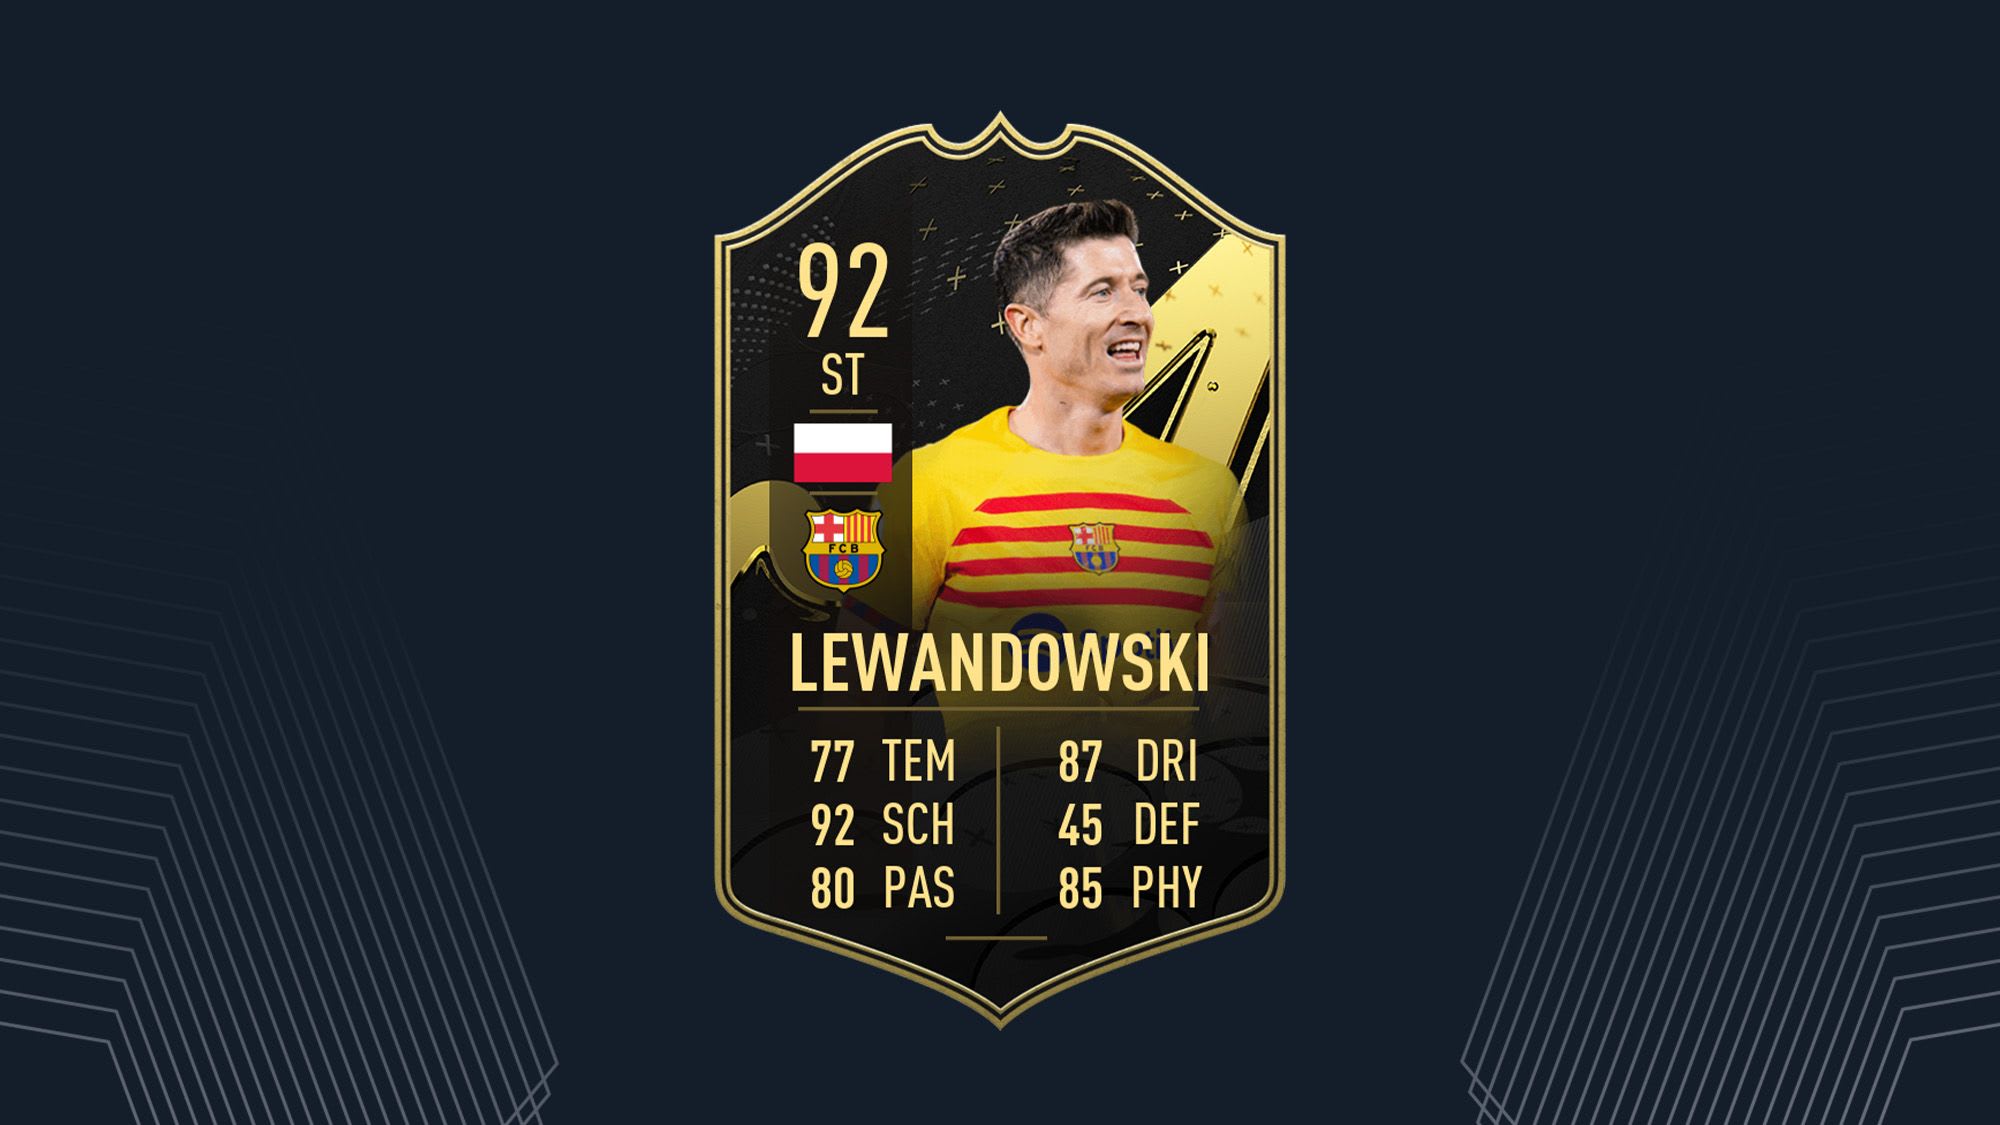 Robert Lewandowski - ST - FC Barcelona - 92 GES